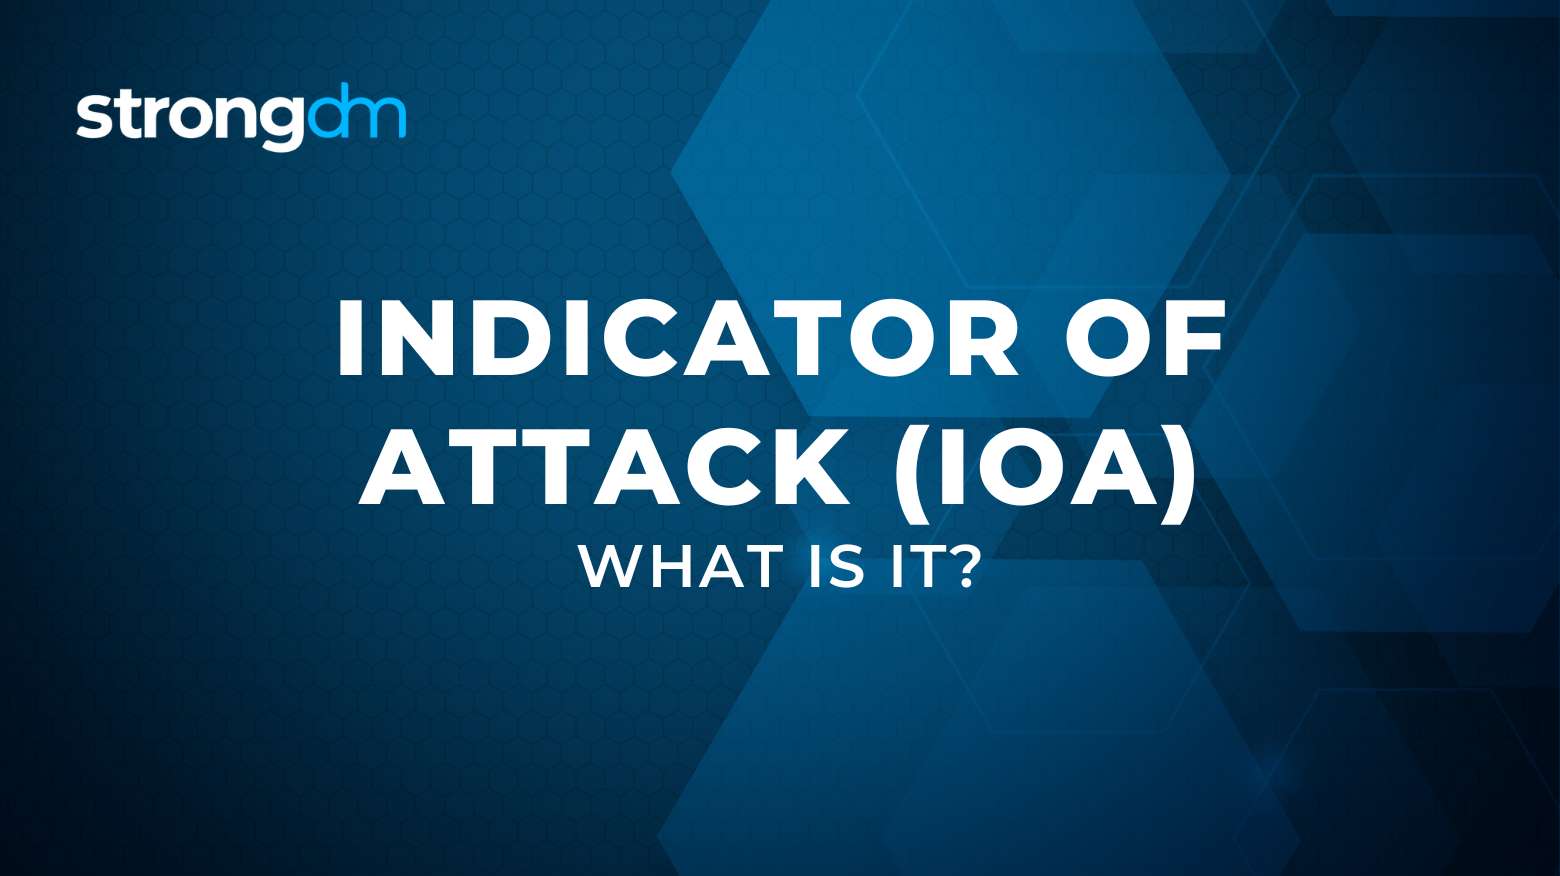 Indicator of Attack (IOA)